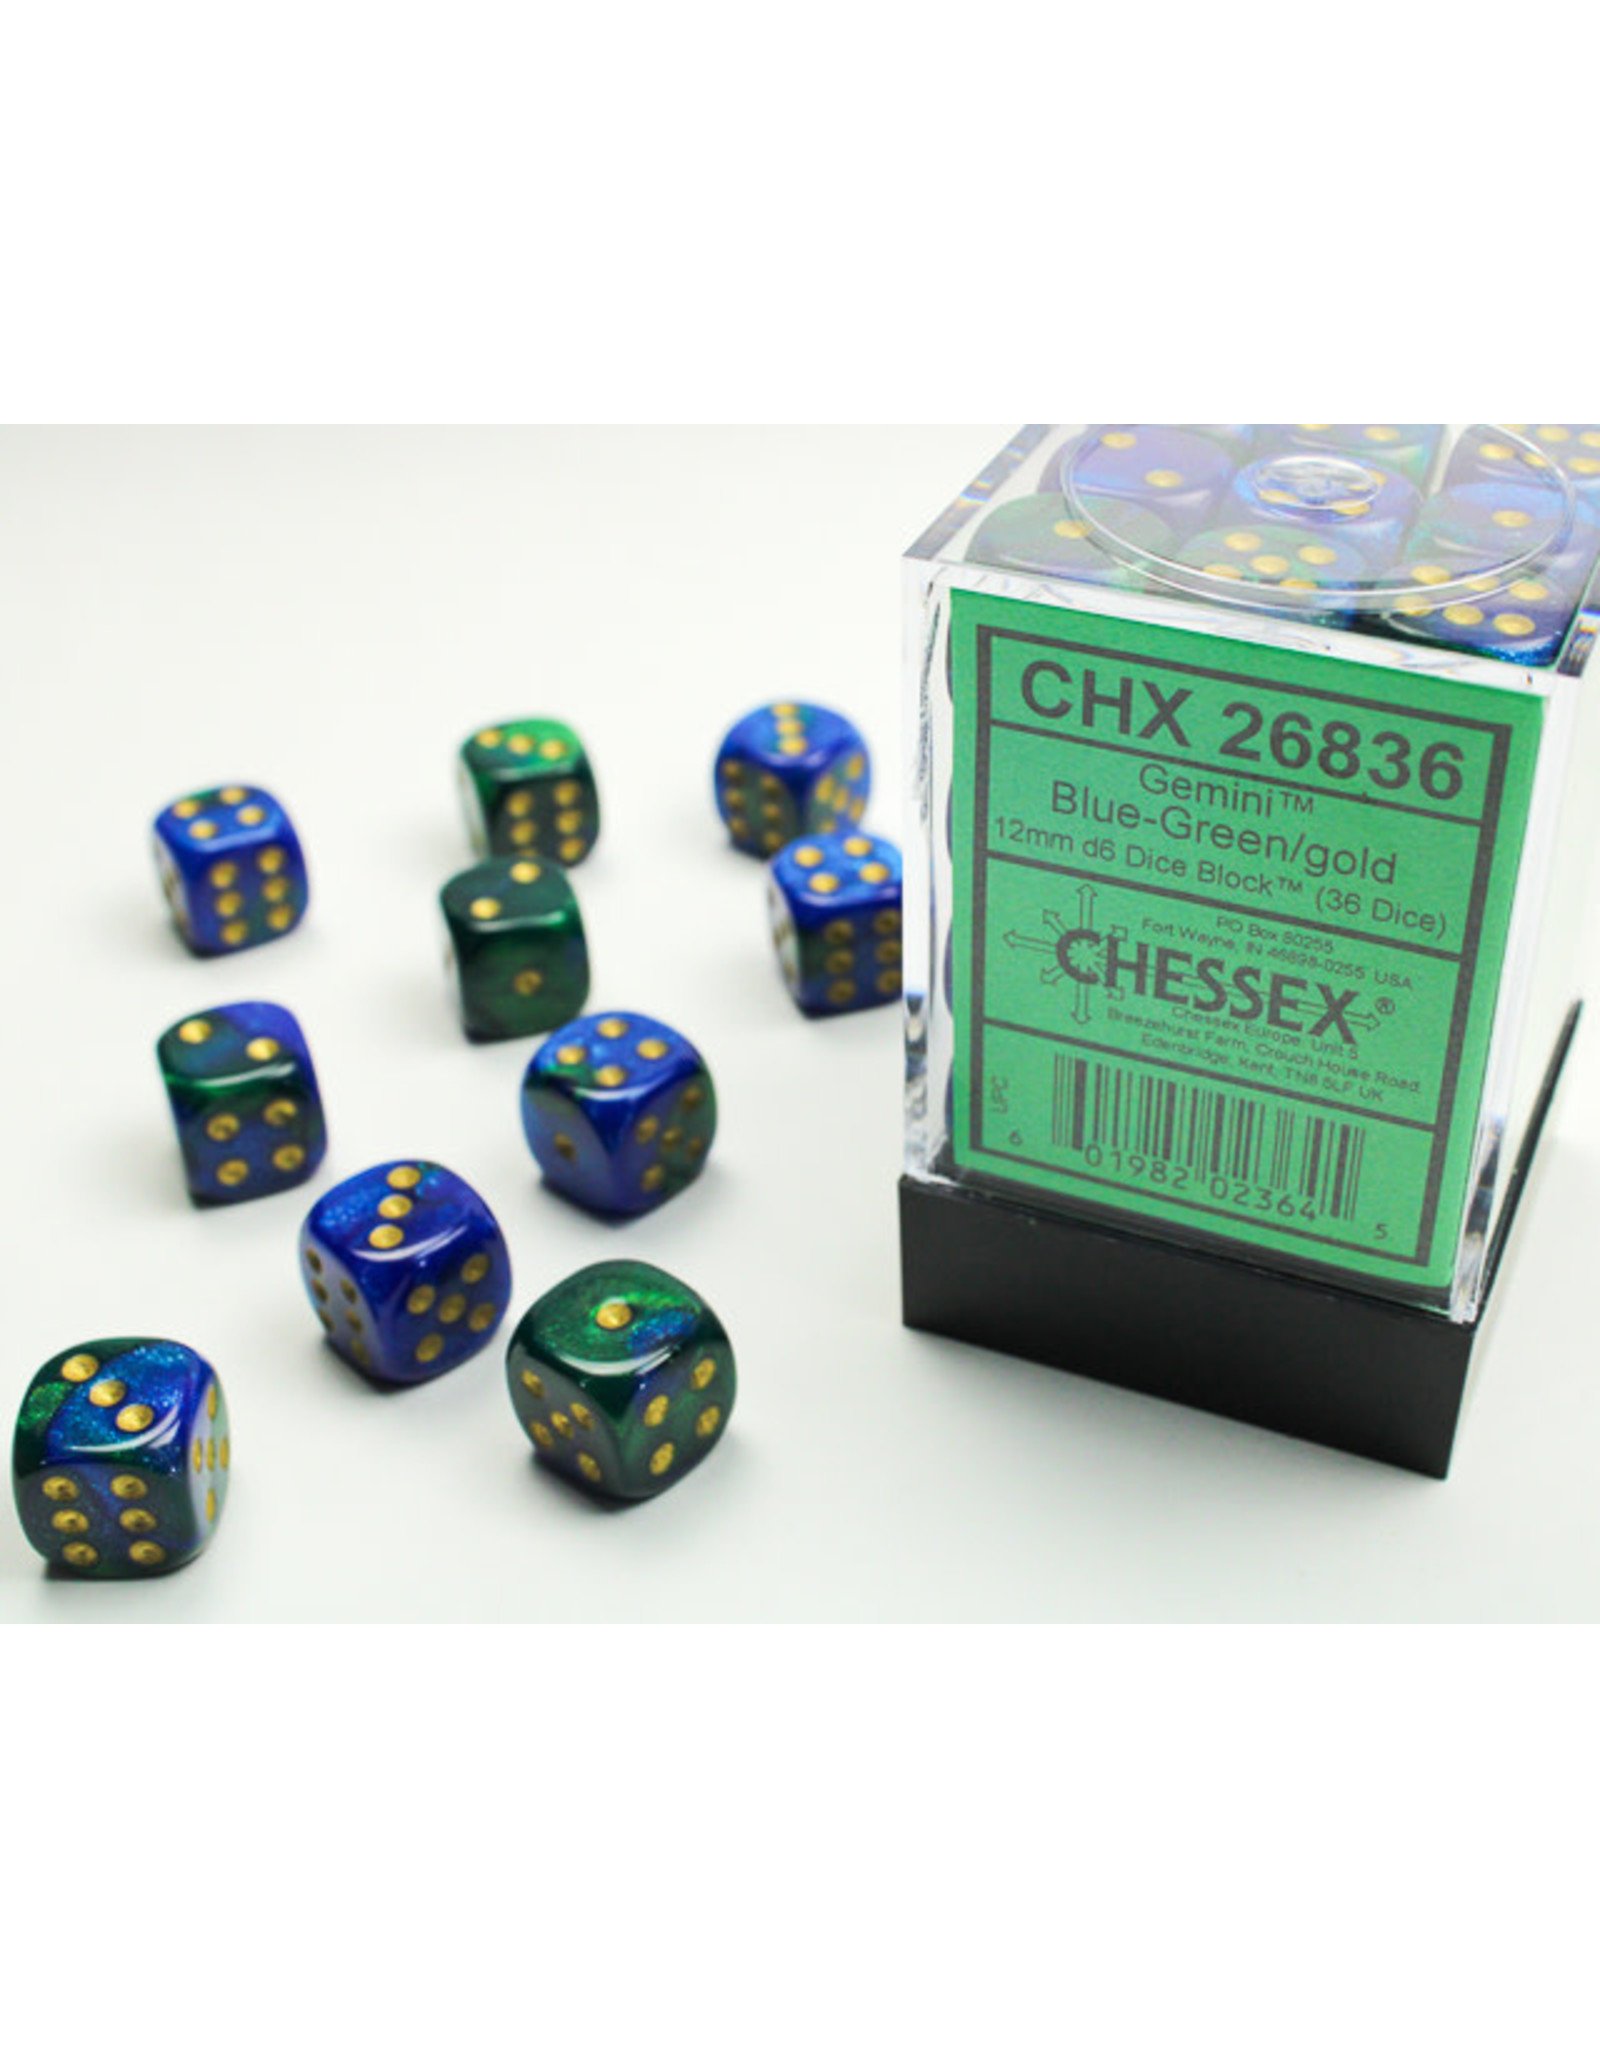 Chessex CHX26836 Gemini 3: 12mm D6 Blue-Green Gold/Black (36)